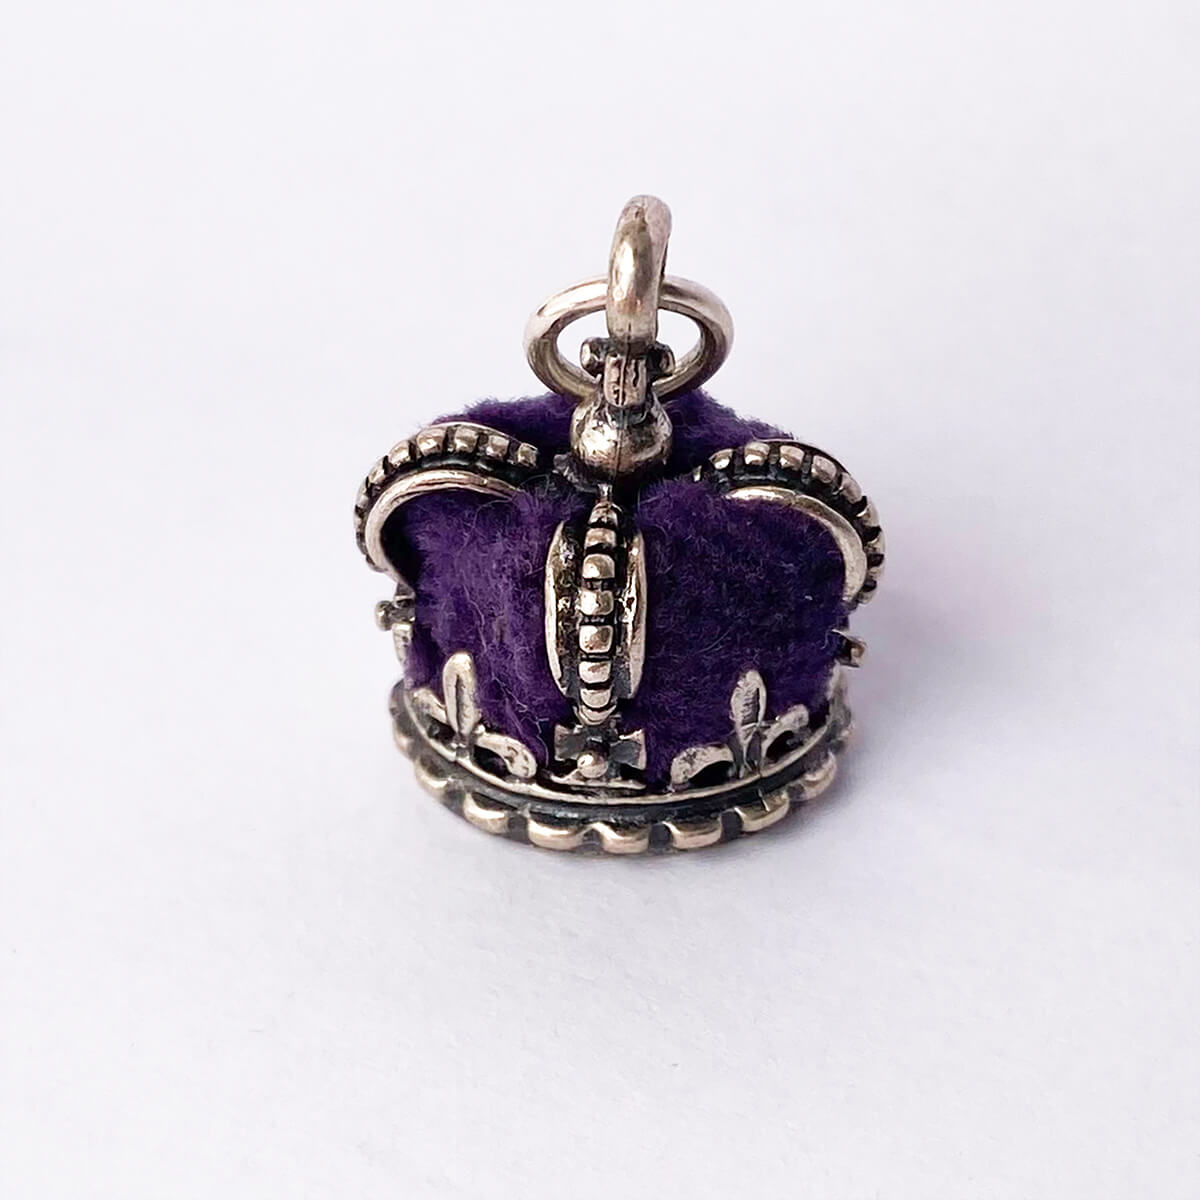 Vintage Beau crown charm with purple velvet